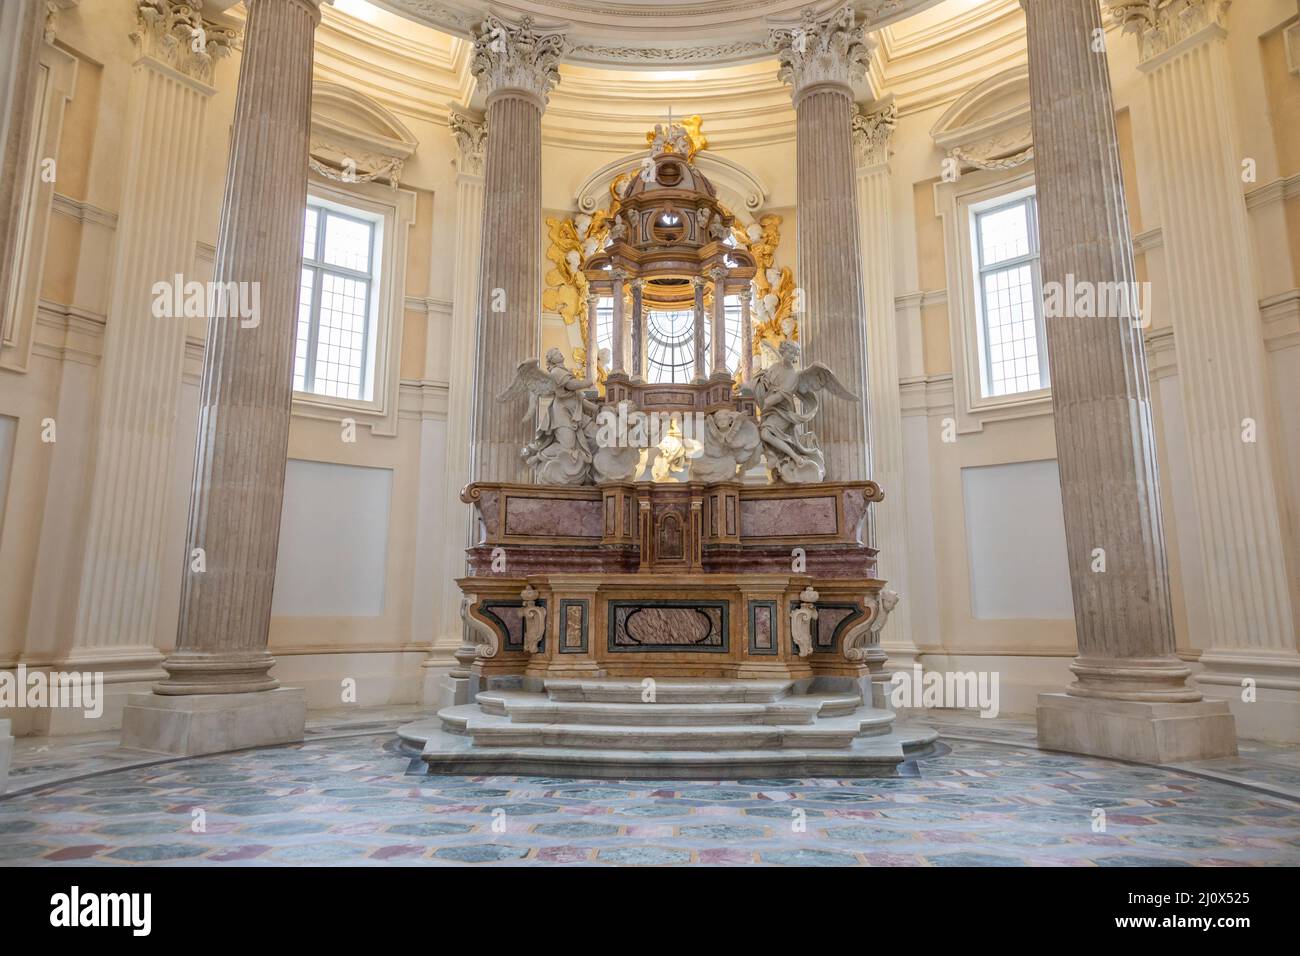 Baroque catholic church altar in Italy. Old interior religious building. Stock Photo